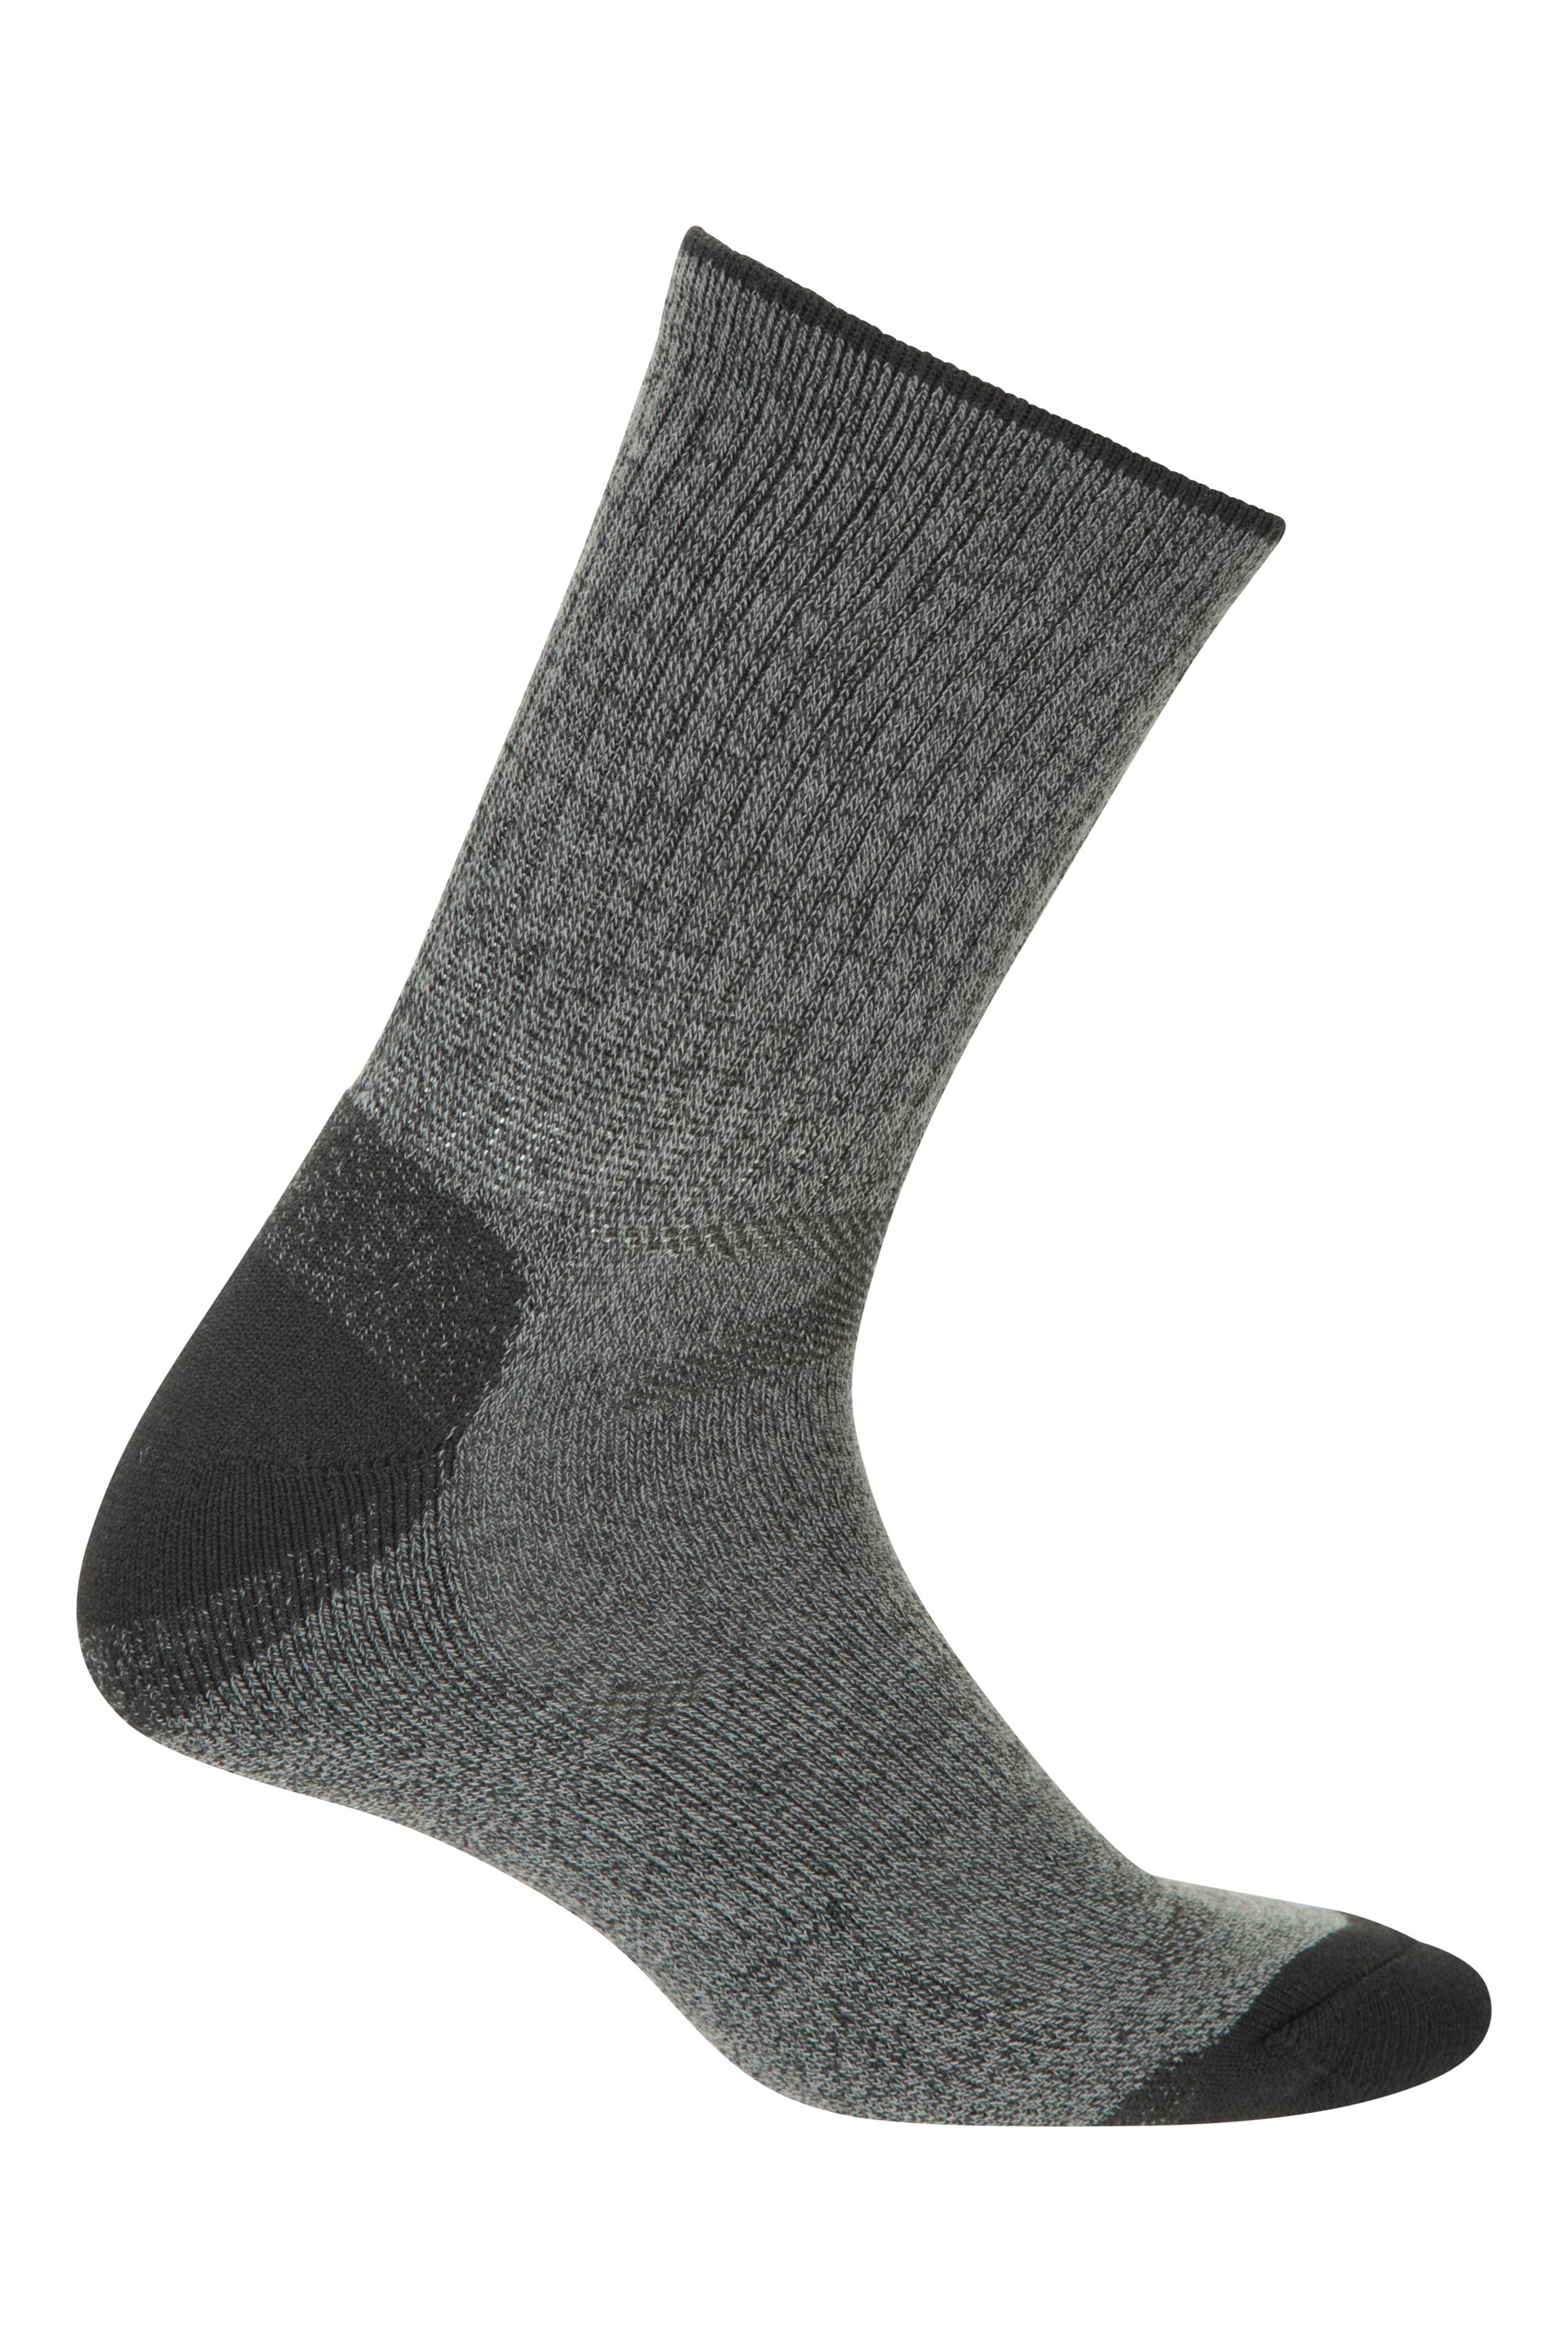 Isocool Outdoor Walking Socks | Mountain Warehouse GB